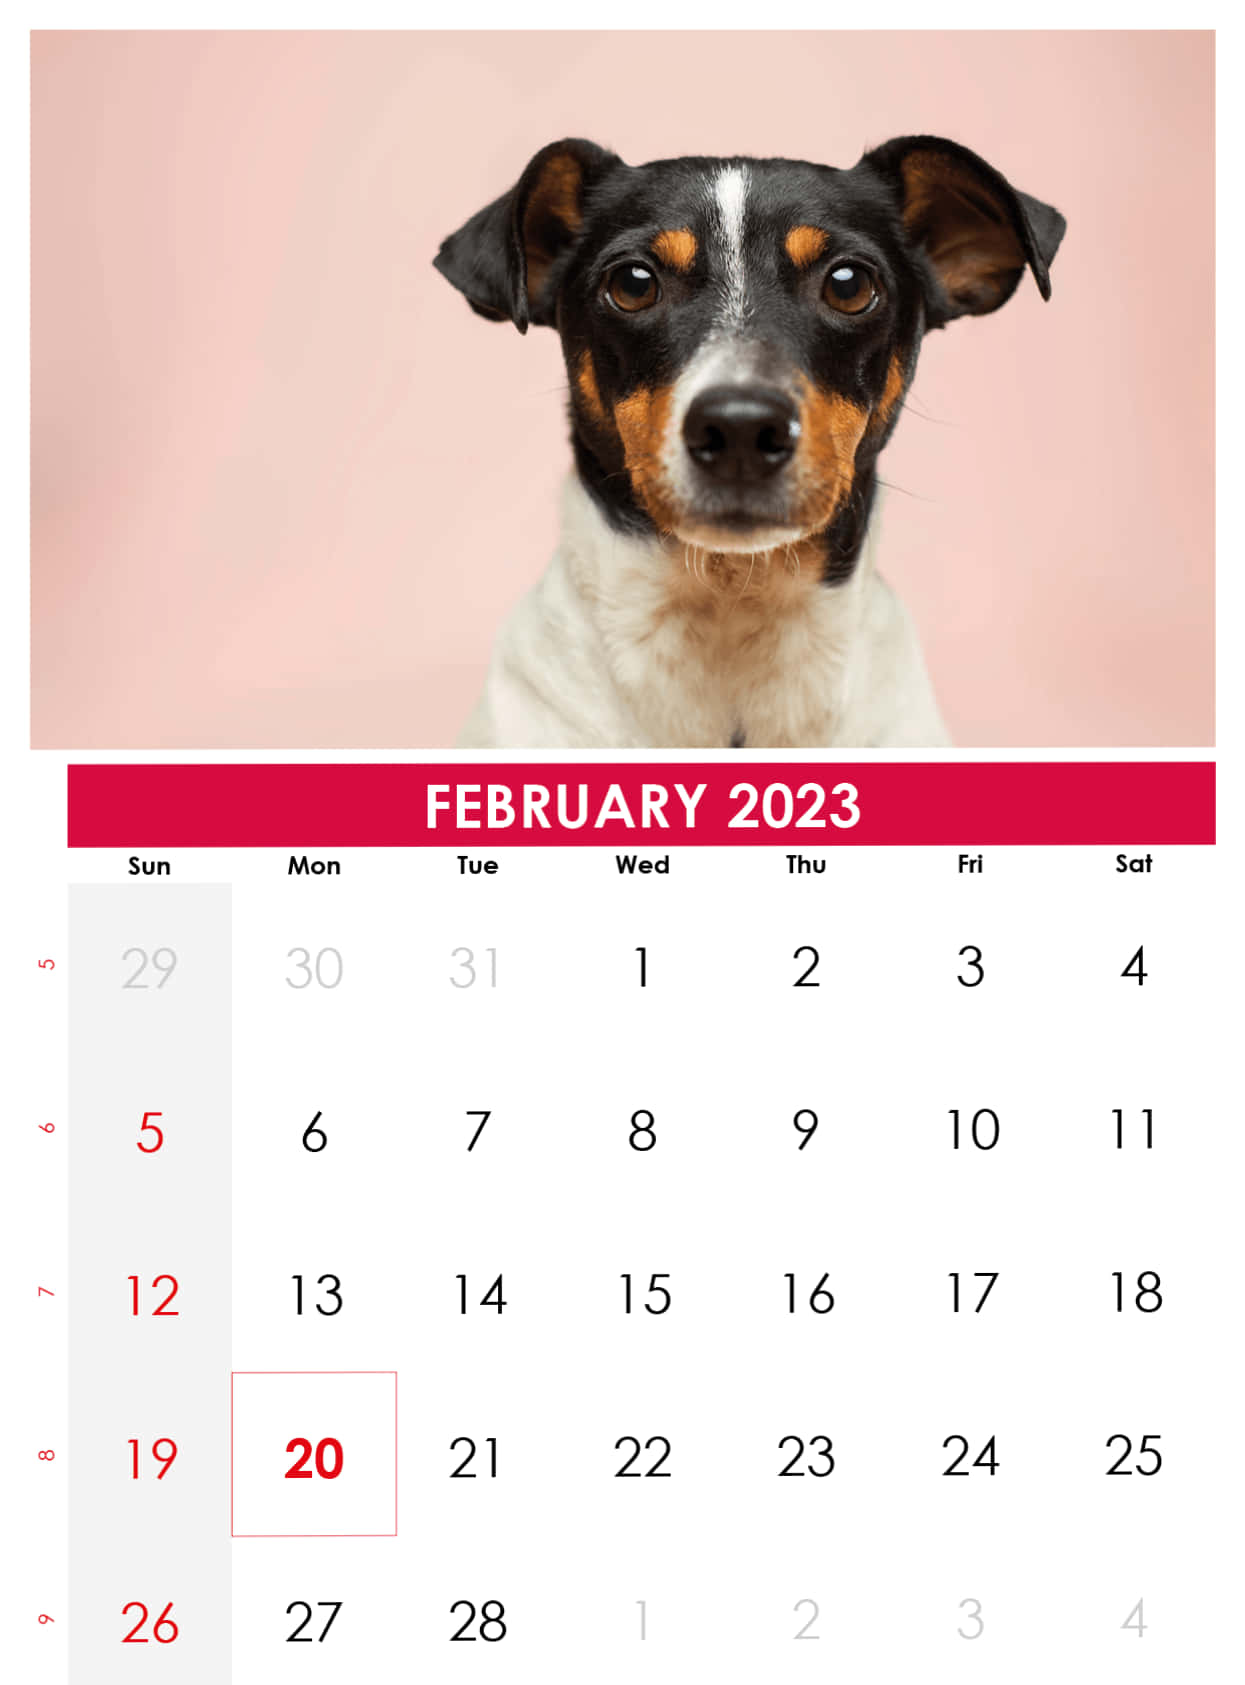 February Calendar Wallpaper